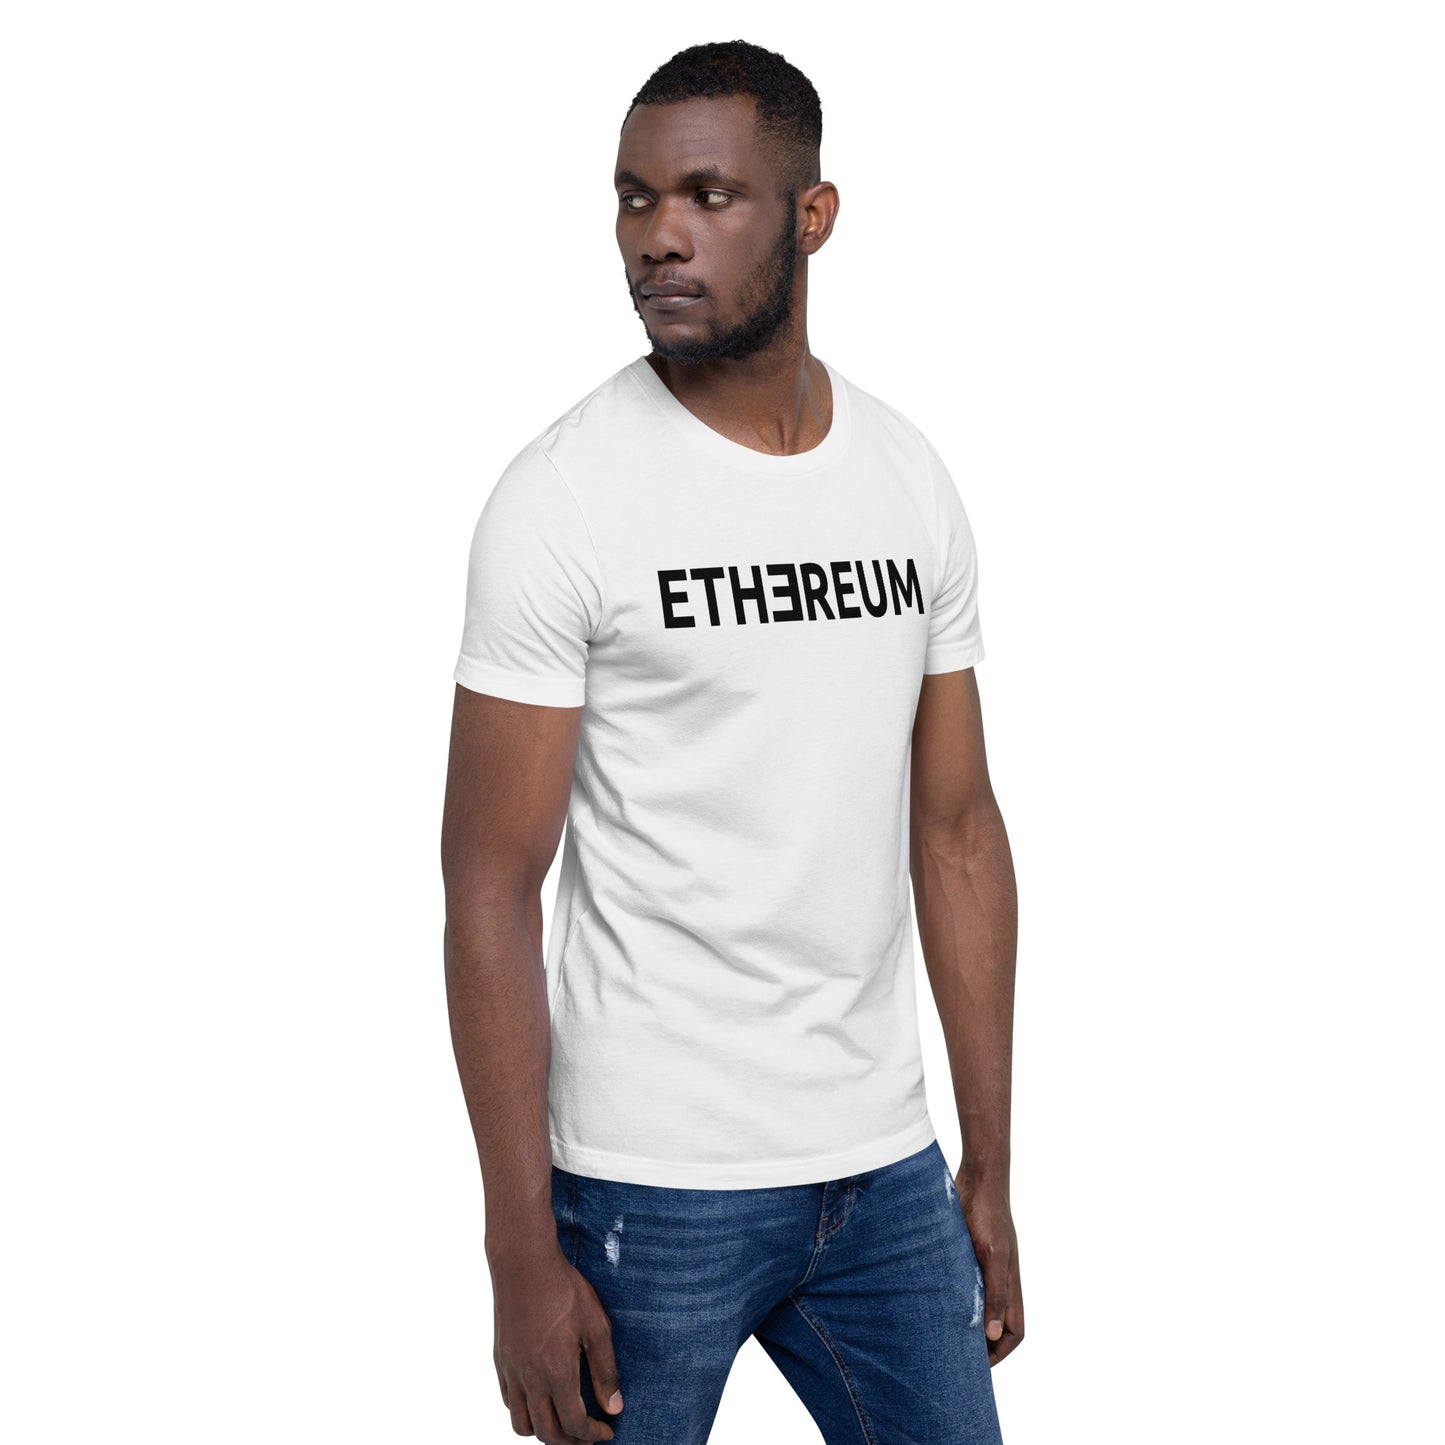 Ethereum Misspelled T-Shirt